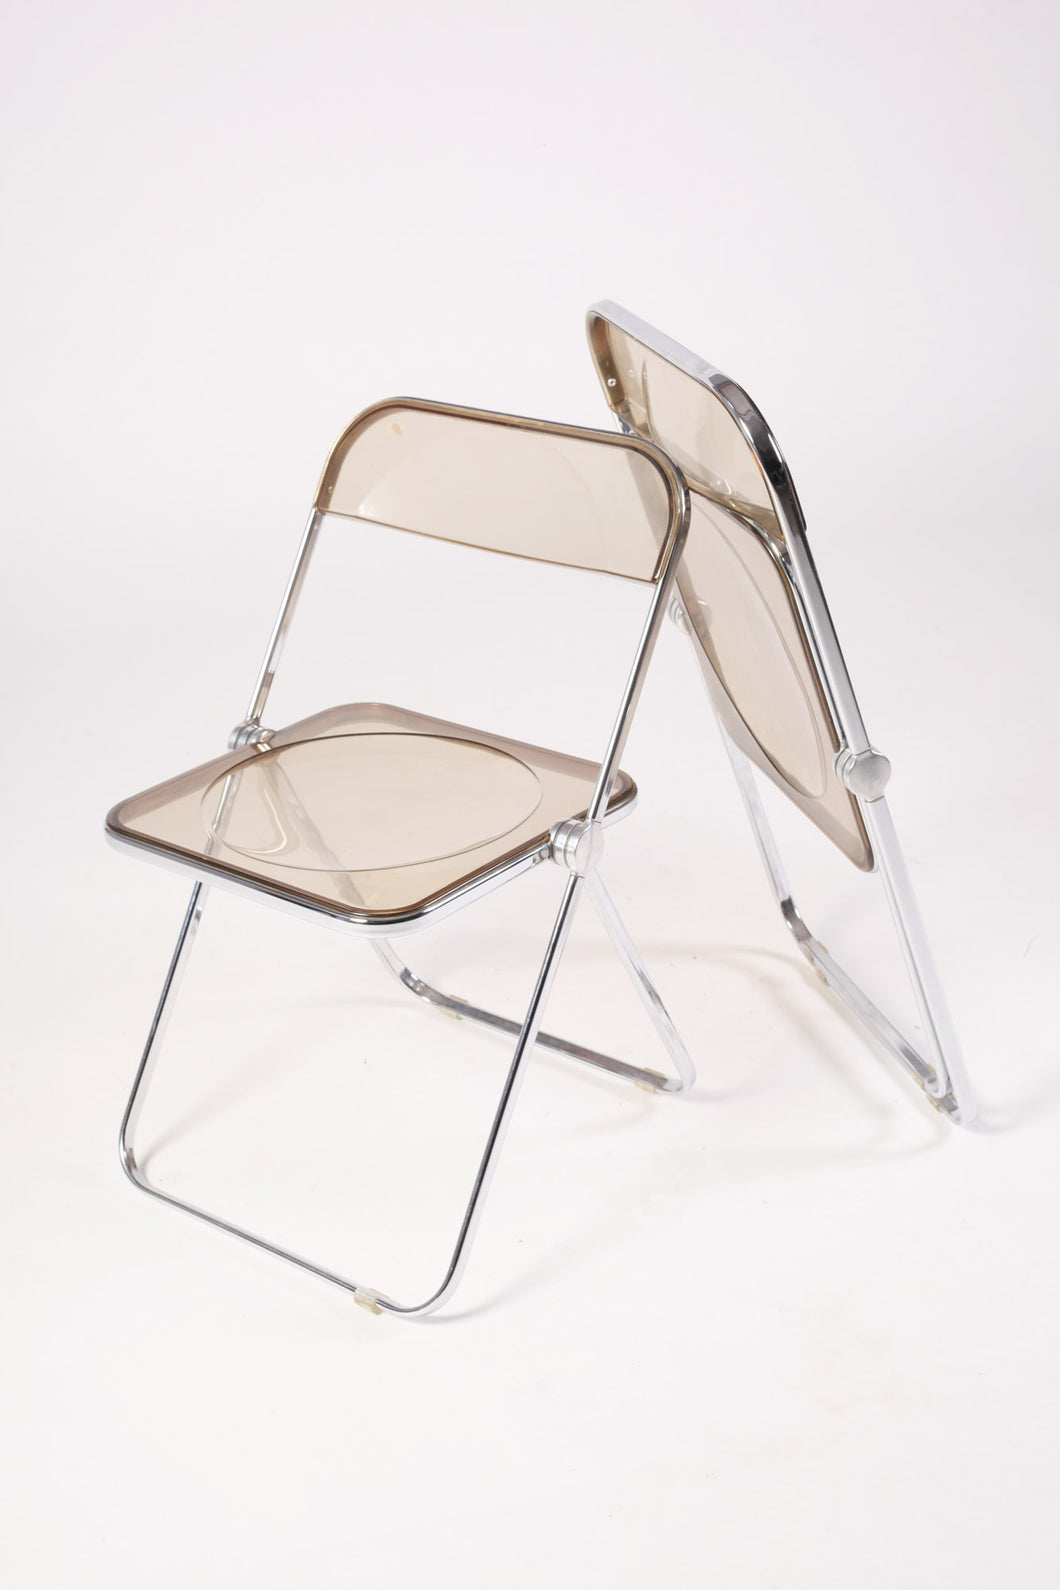 Pair of Giancarlo Piretti Plia Folding Chairs